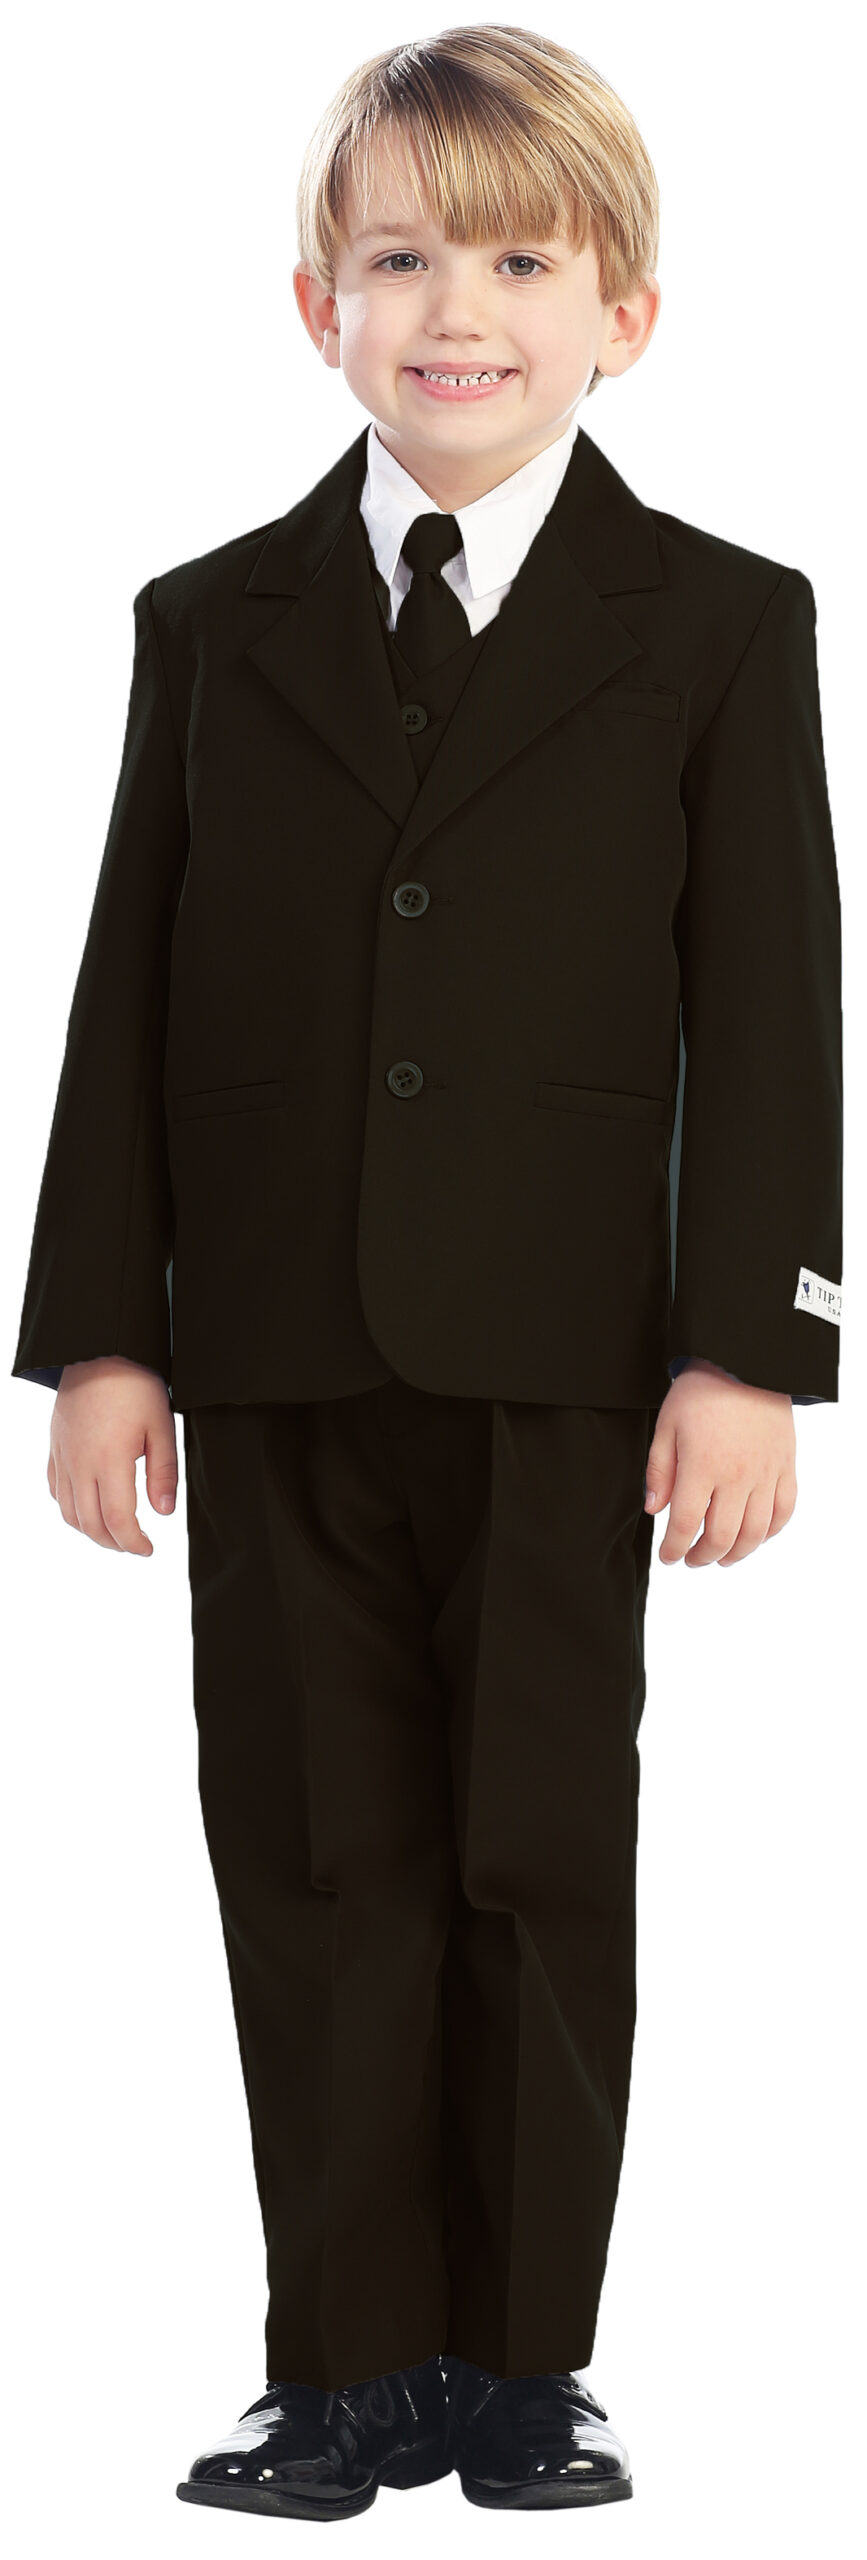 Avery Hill 5-Piece Boy's 2-Button Dress Suit Full-Back Vest - Brown Size 20